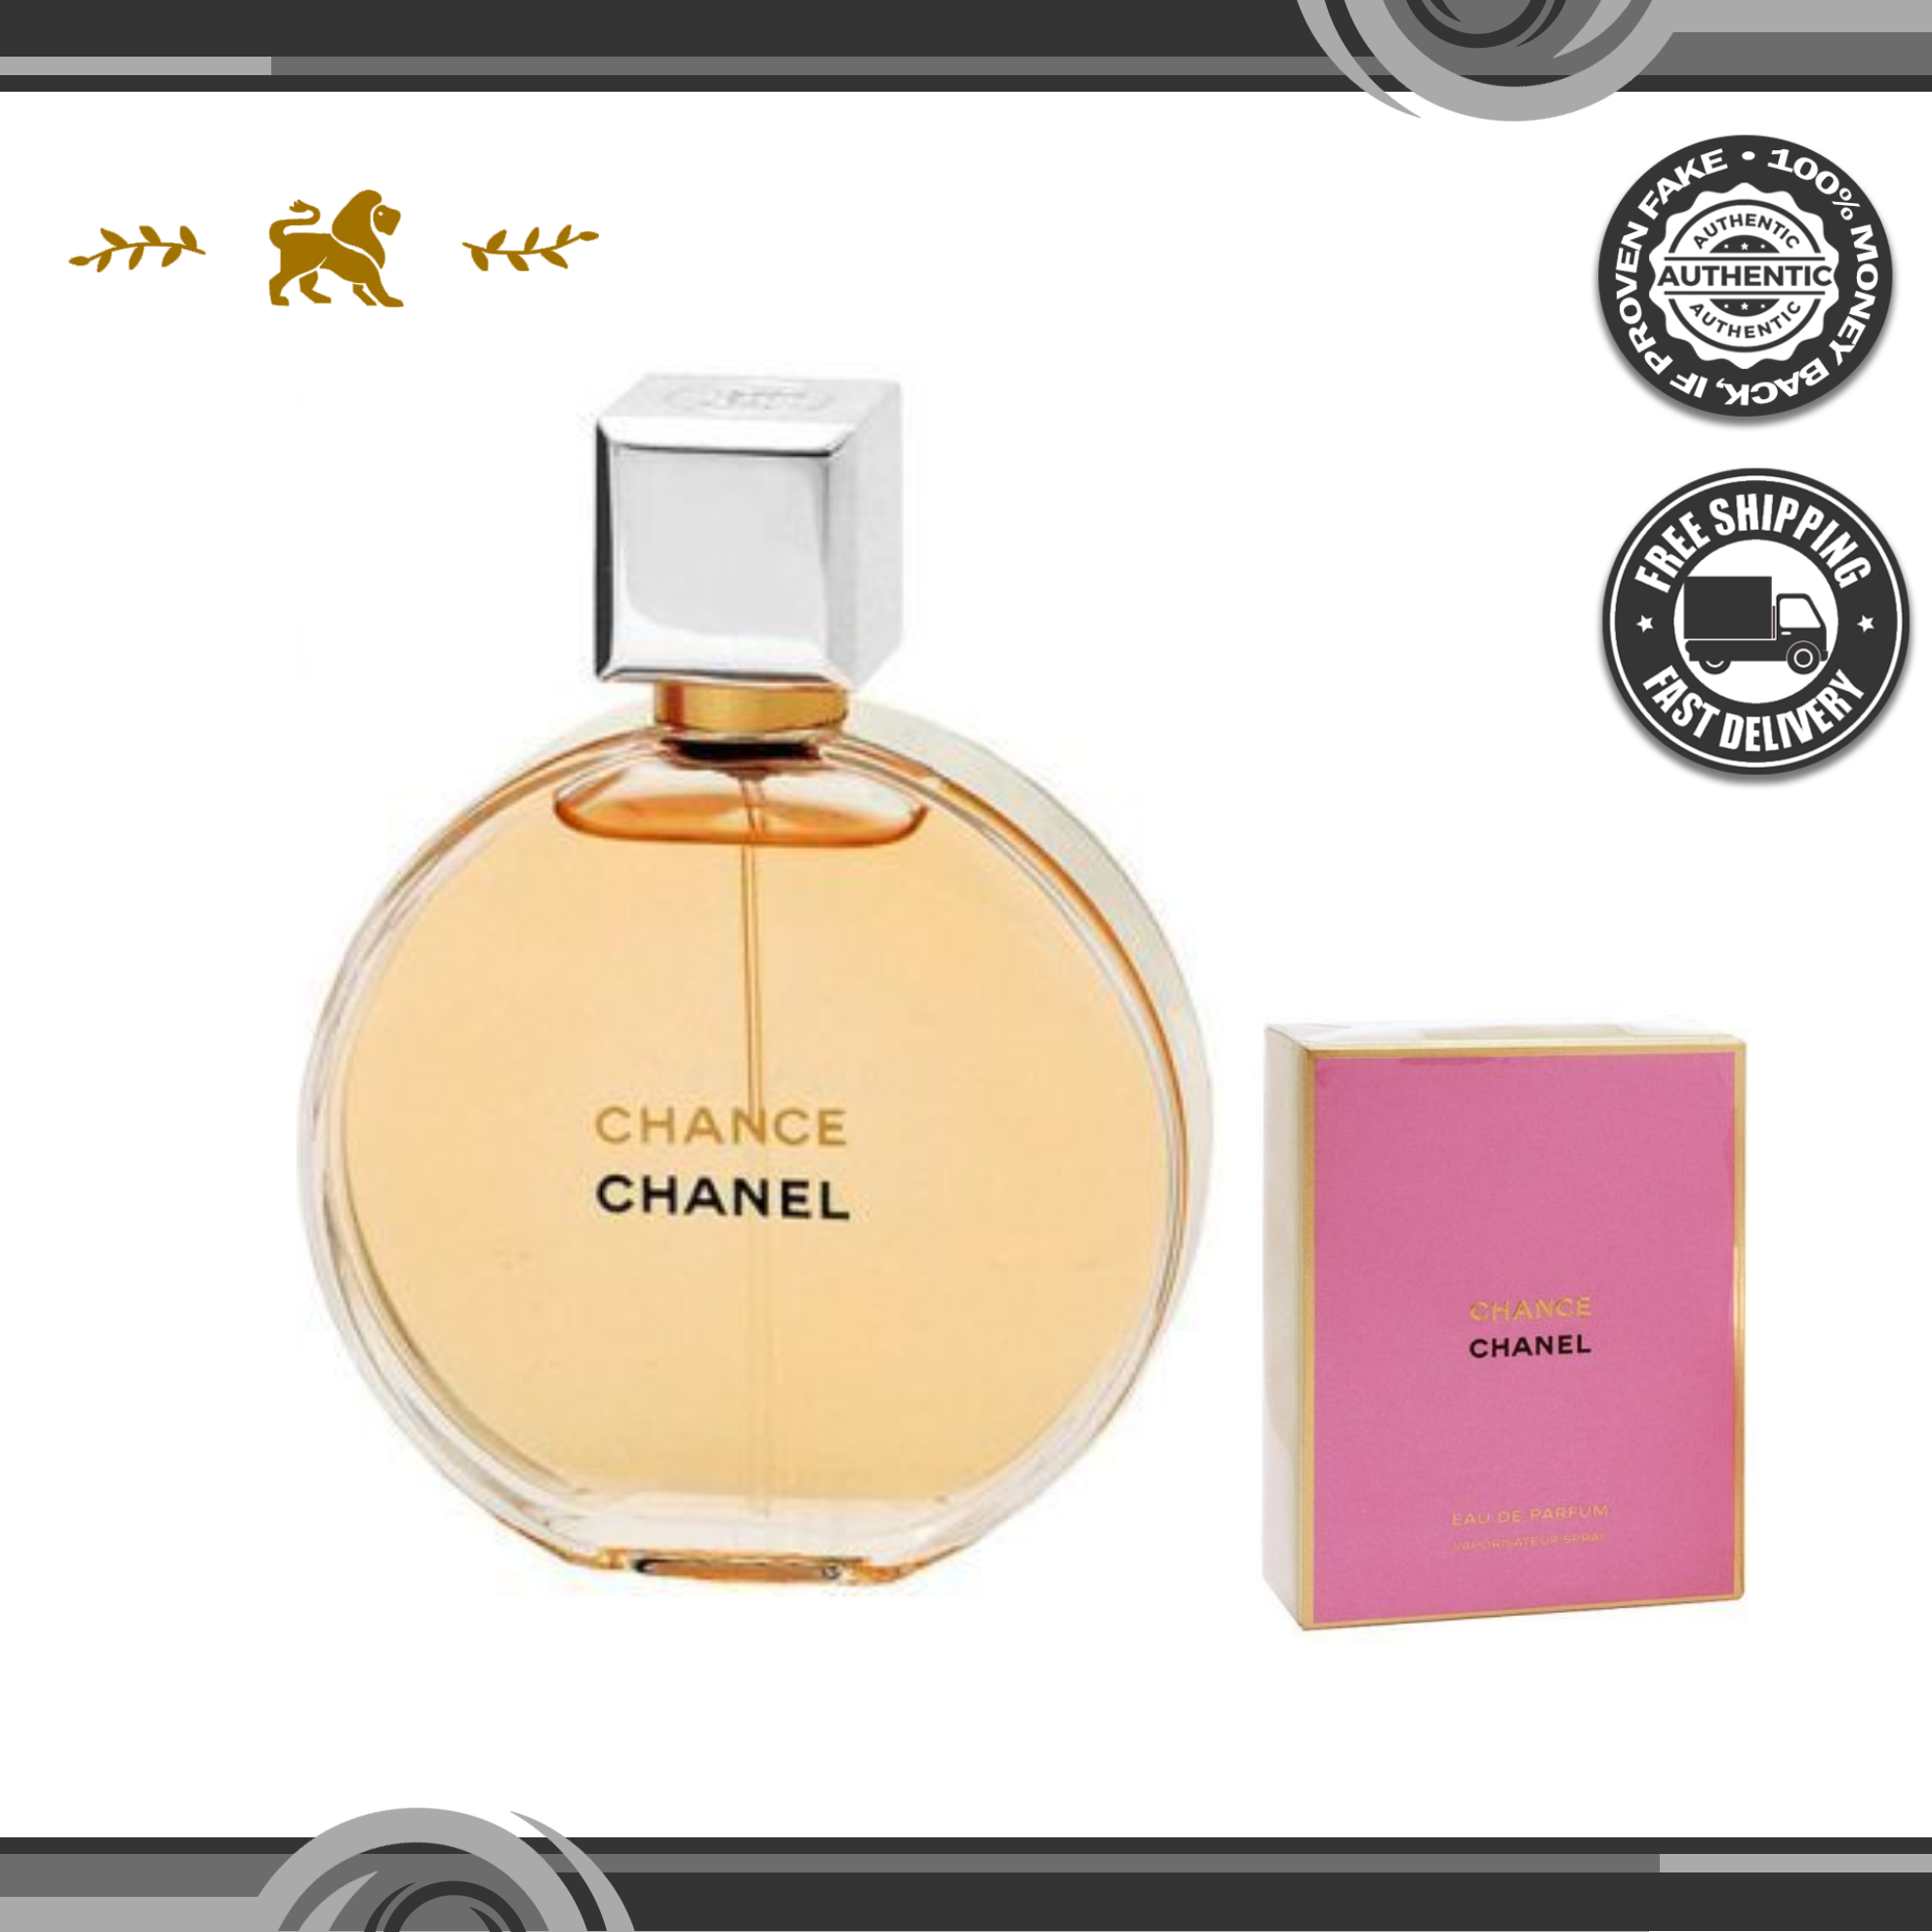 Fake vs Original - The original bottle of Chanel Chance perfume